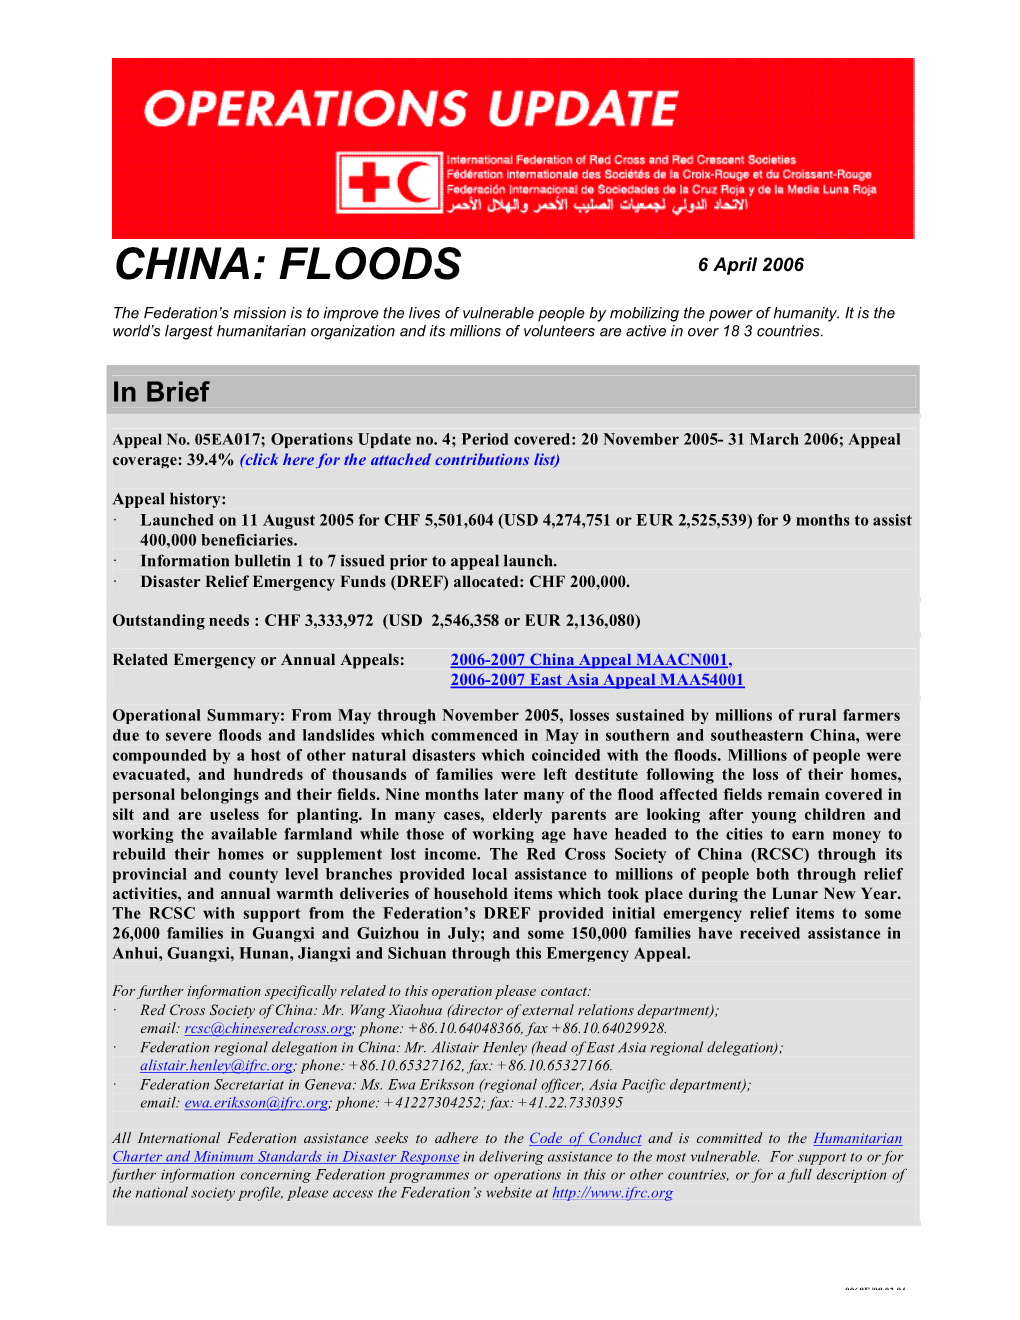 CHINA: FLOODS 6 April 2006